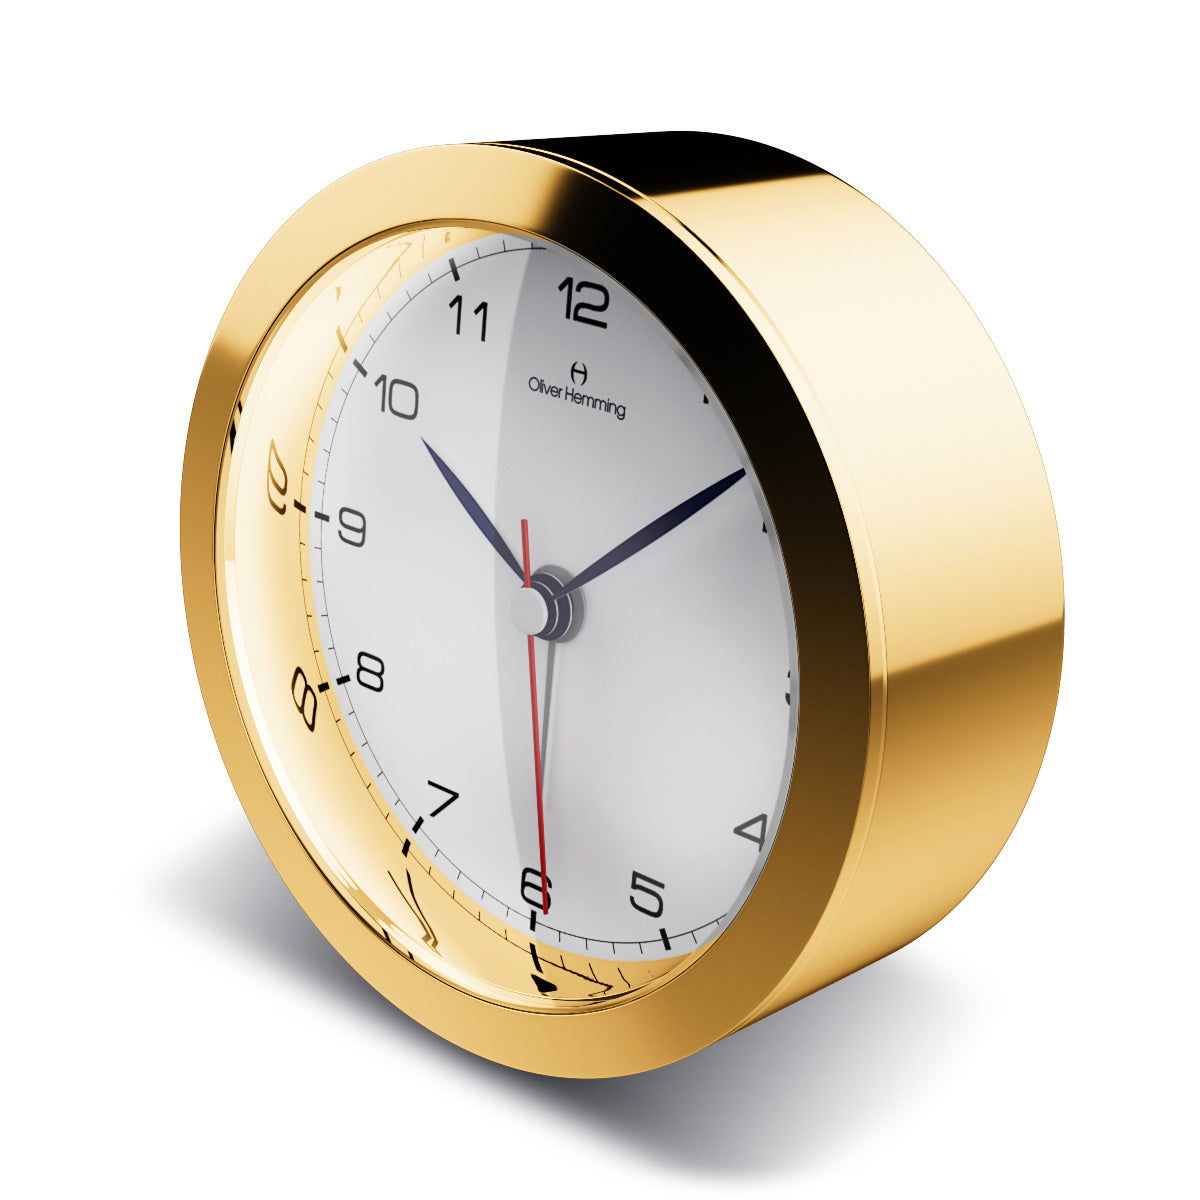 Classic Gold Obsession Alarm Clock - HX81G5W